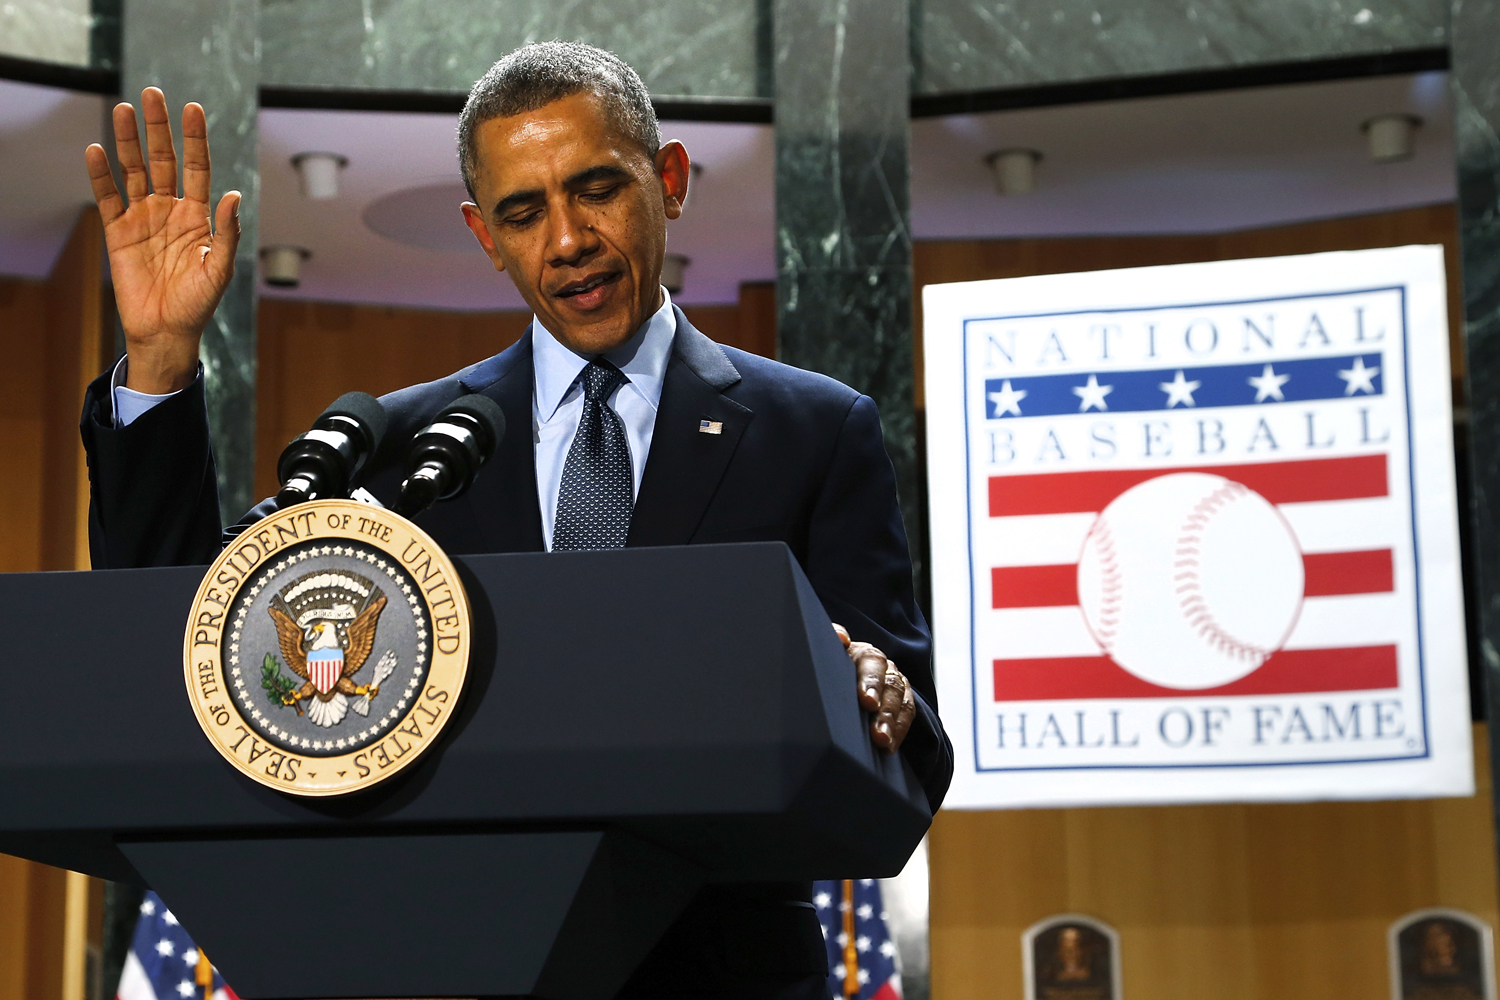 U.S. President Barack Obama delivers remarks at the National Baseball Hall of Fame in Cooperstown